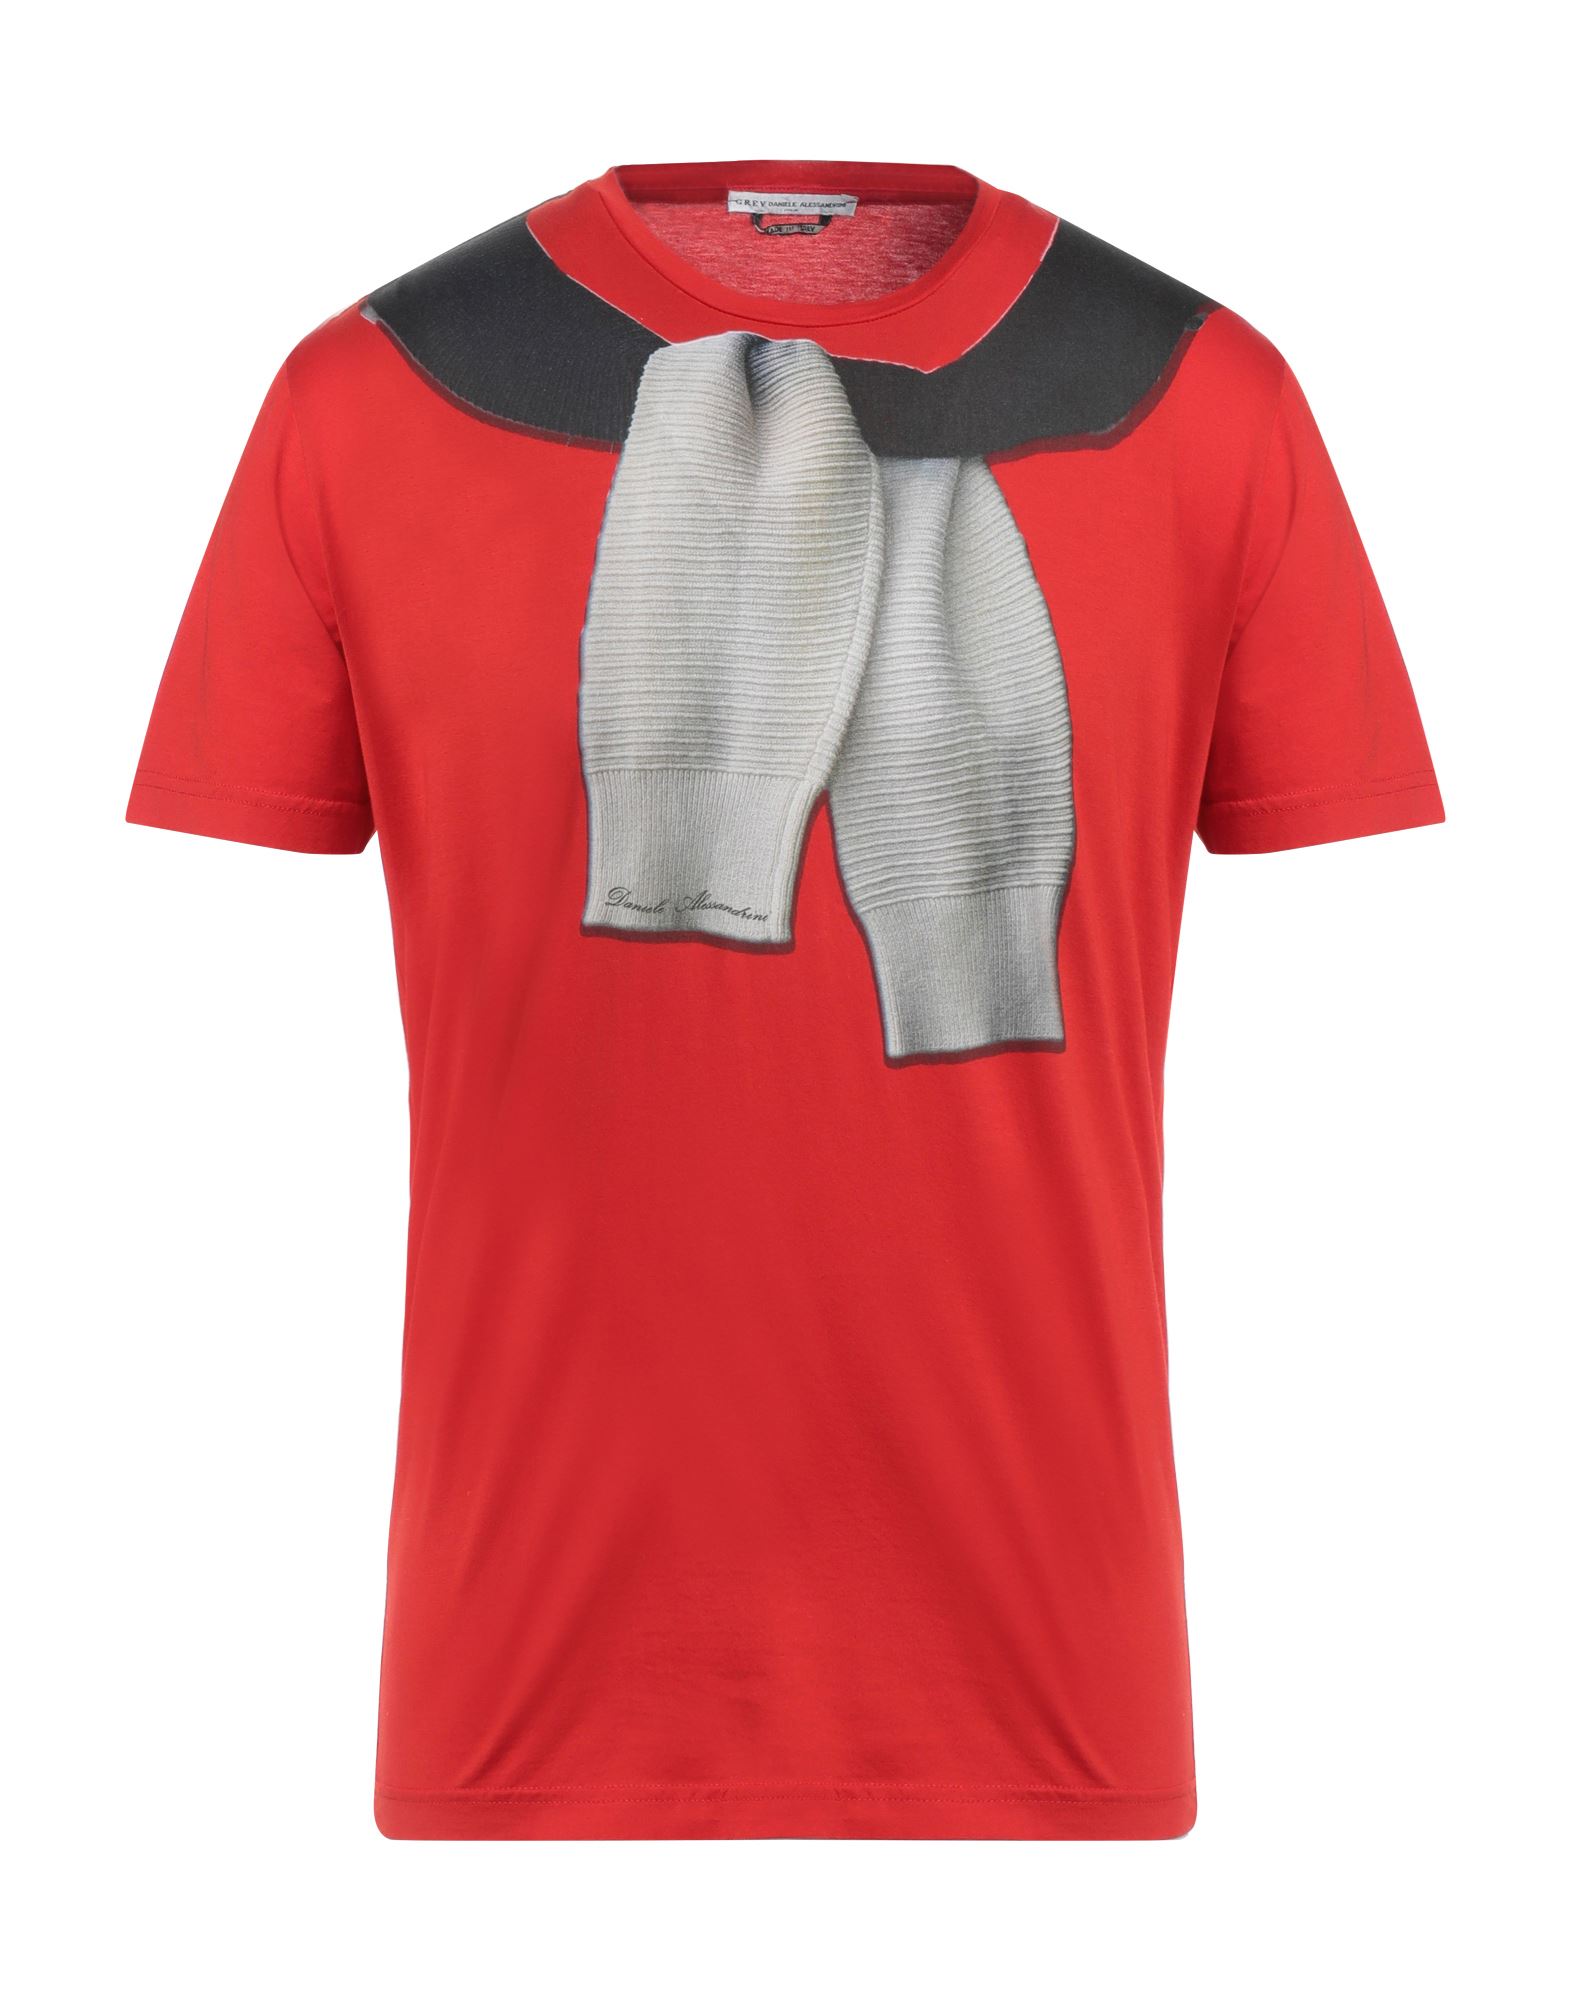 Grey Daniele Alessandrini T-shirts In Tomato Red